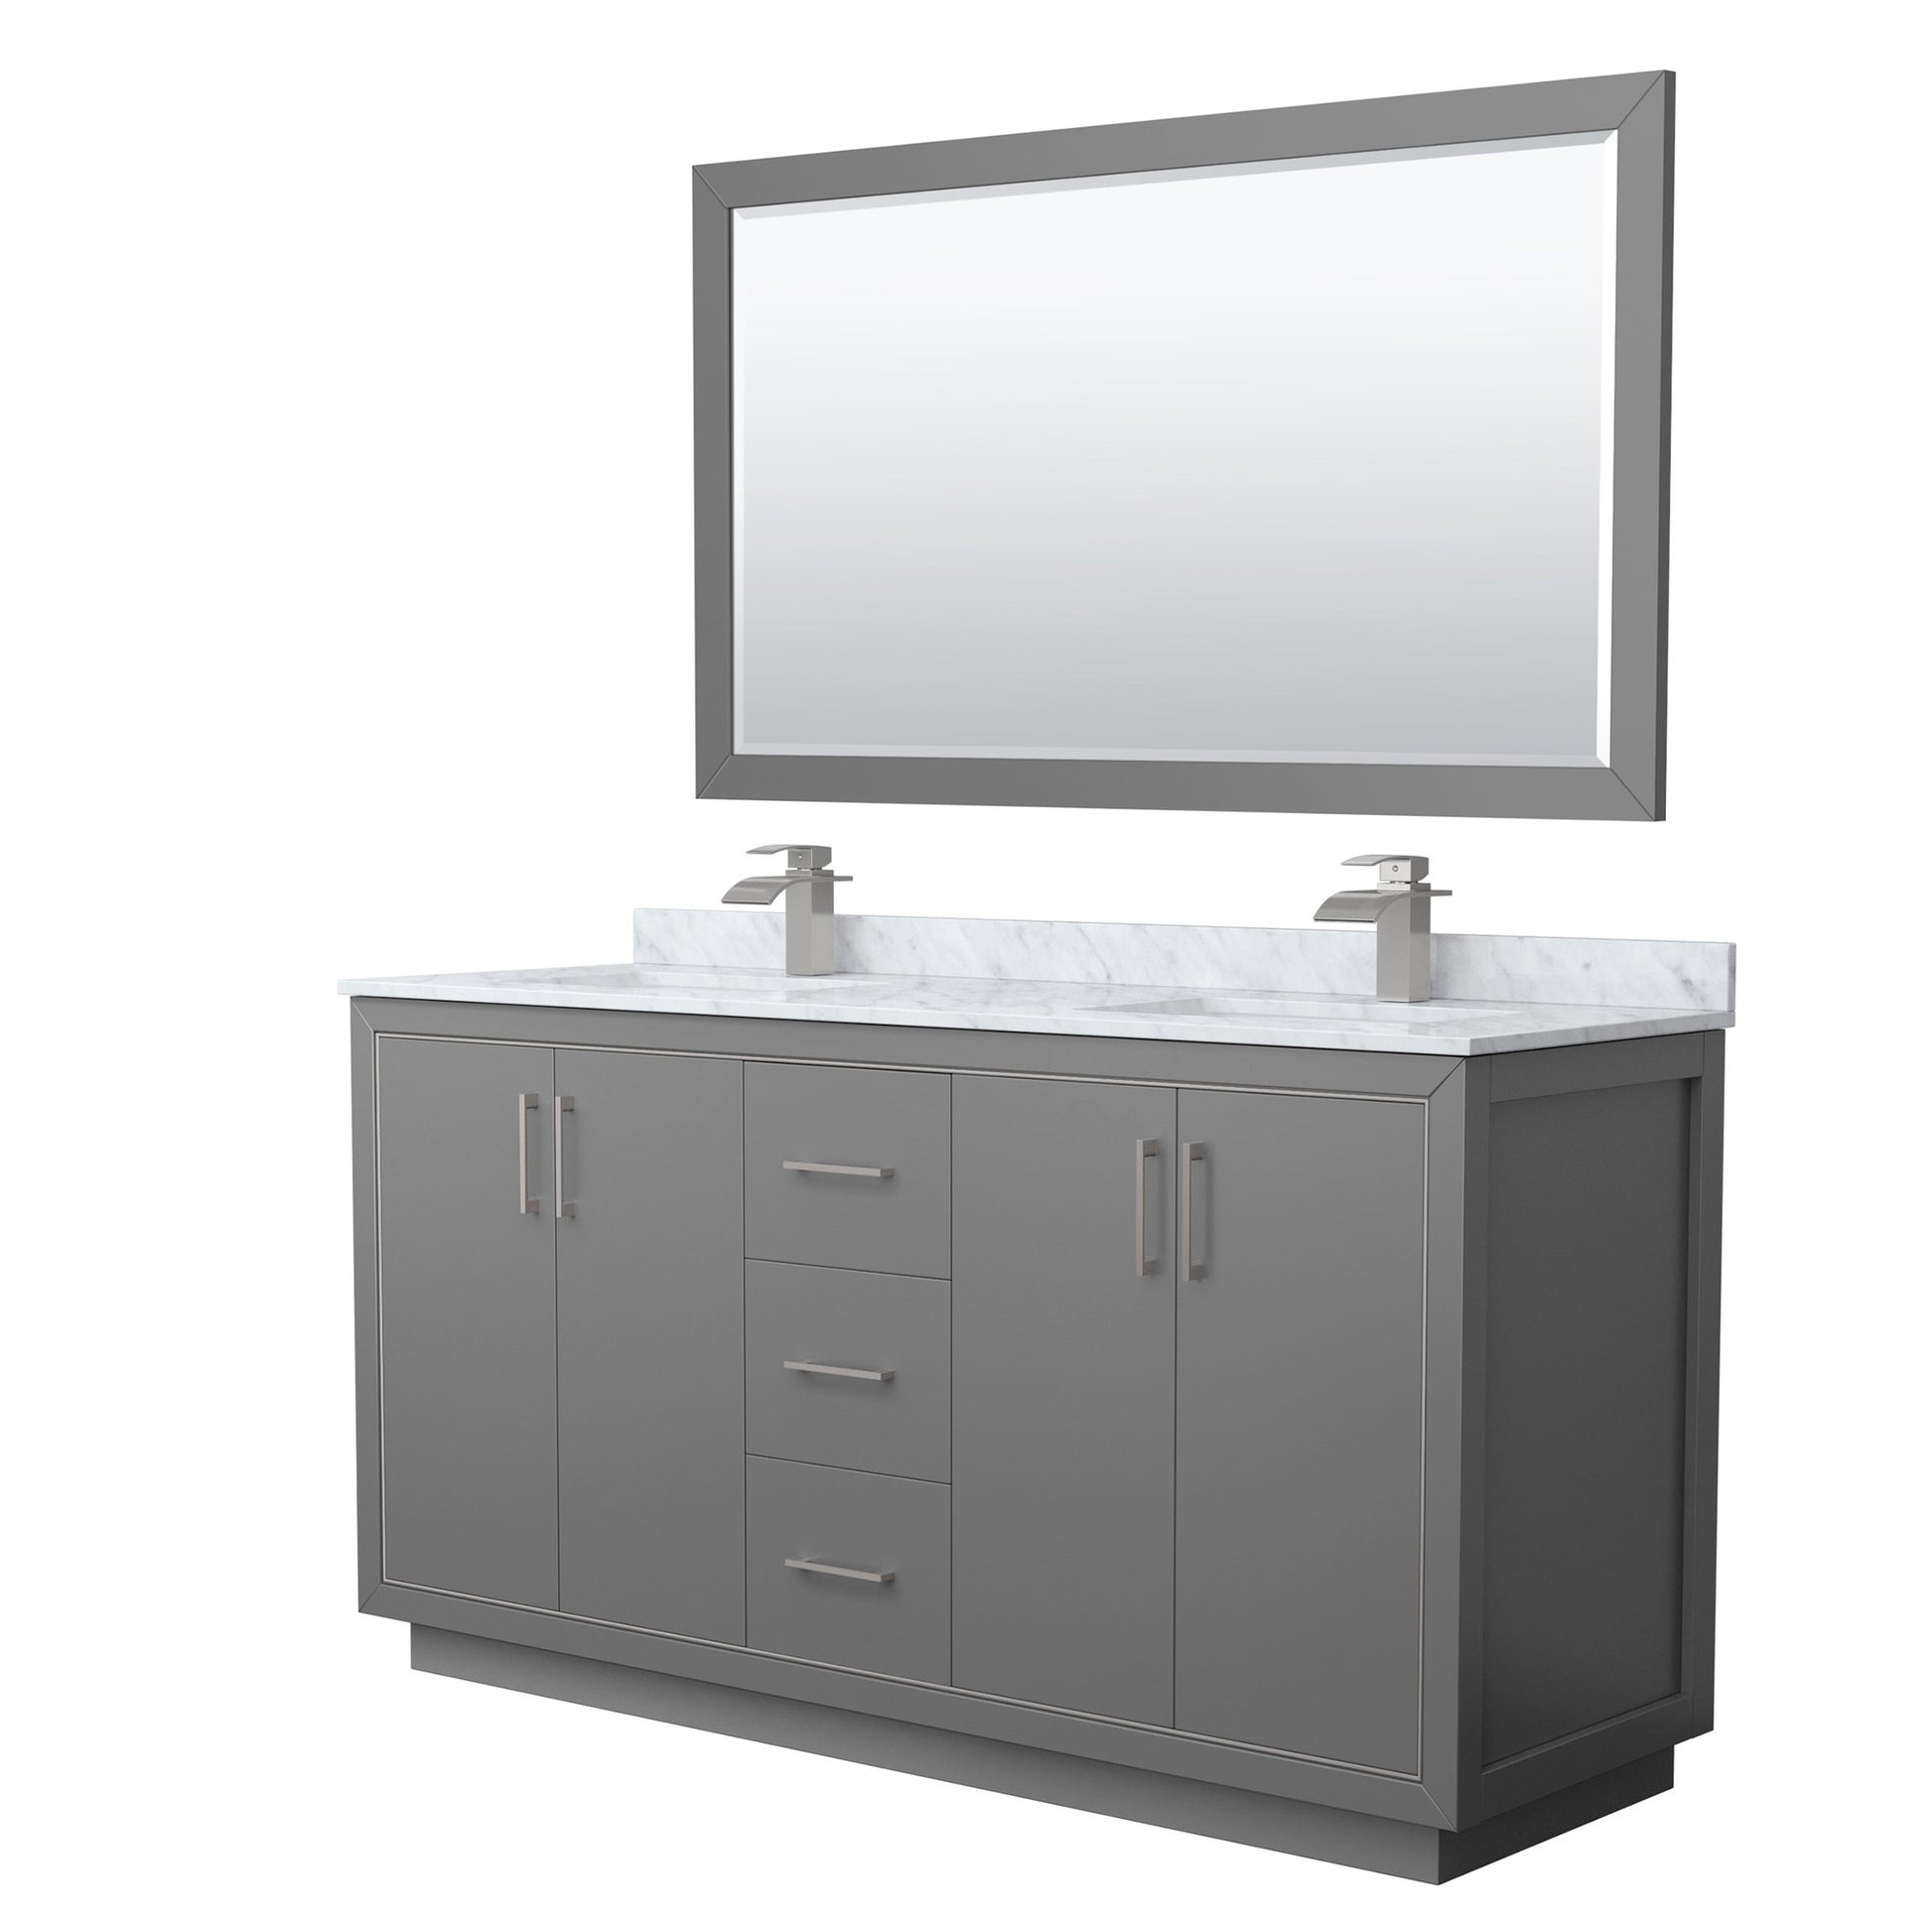 Wyndham Collection Icon 66" Double Bathroom Vanity in Dark Gray, White Carrara Marble Countertop, Undermount Square Sinks, Brushed Nickel Trim, 58" Mirror